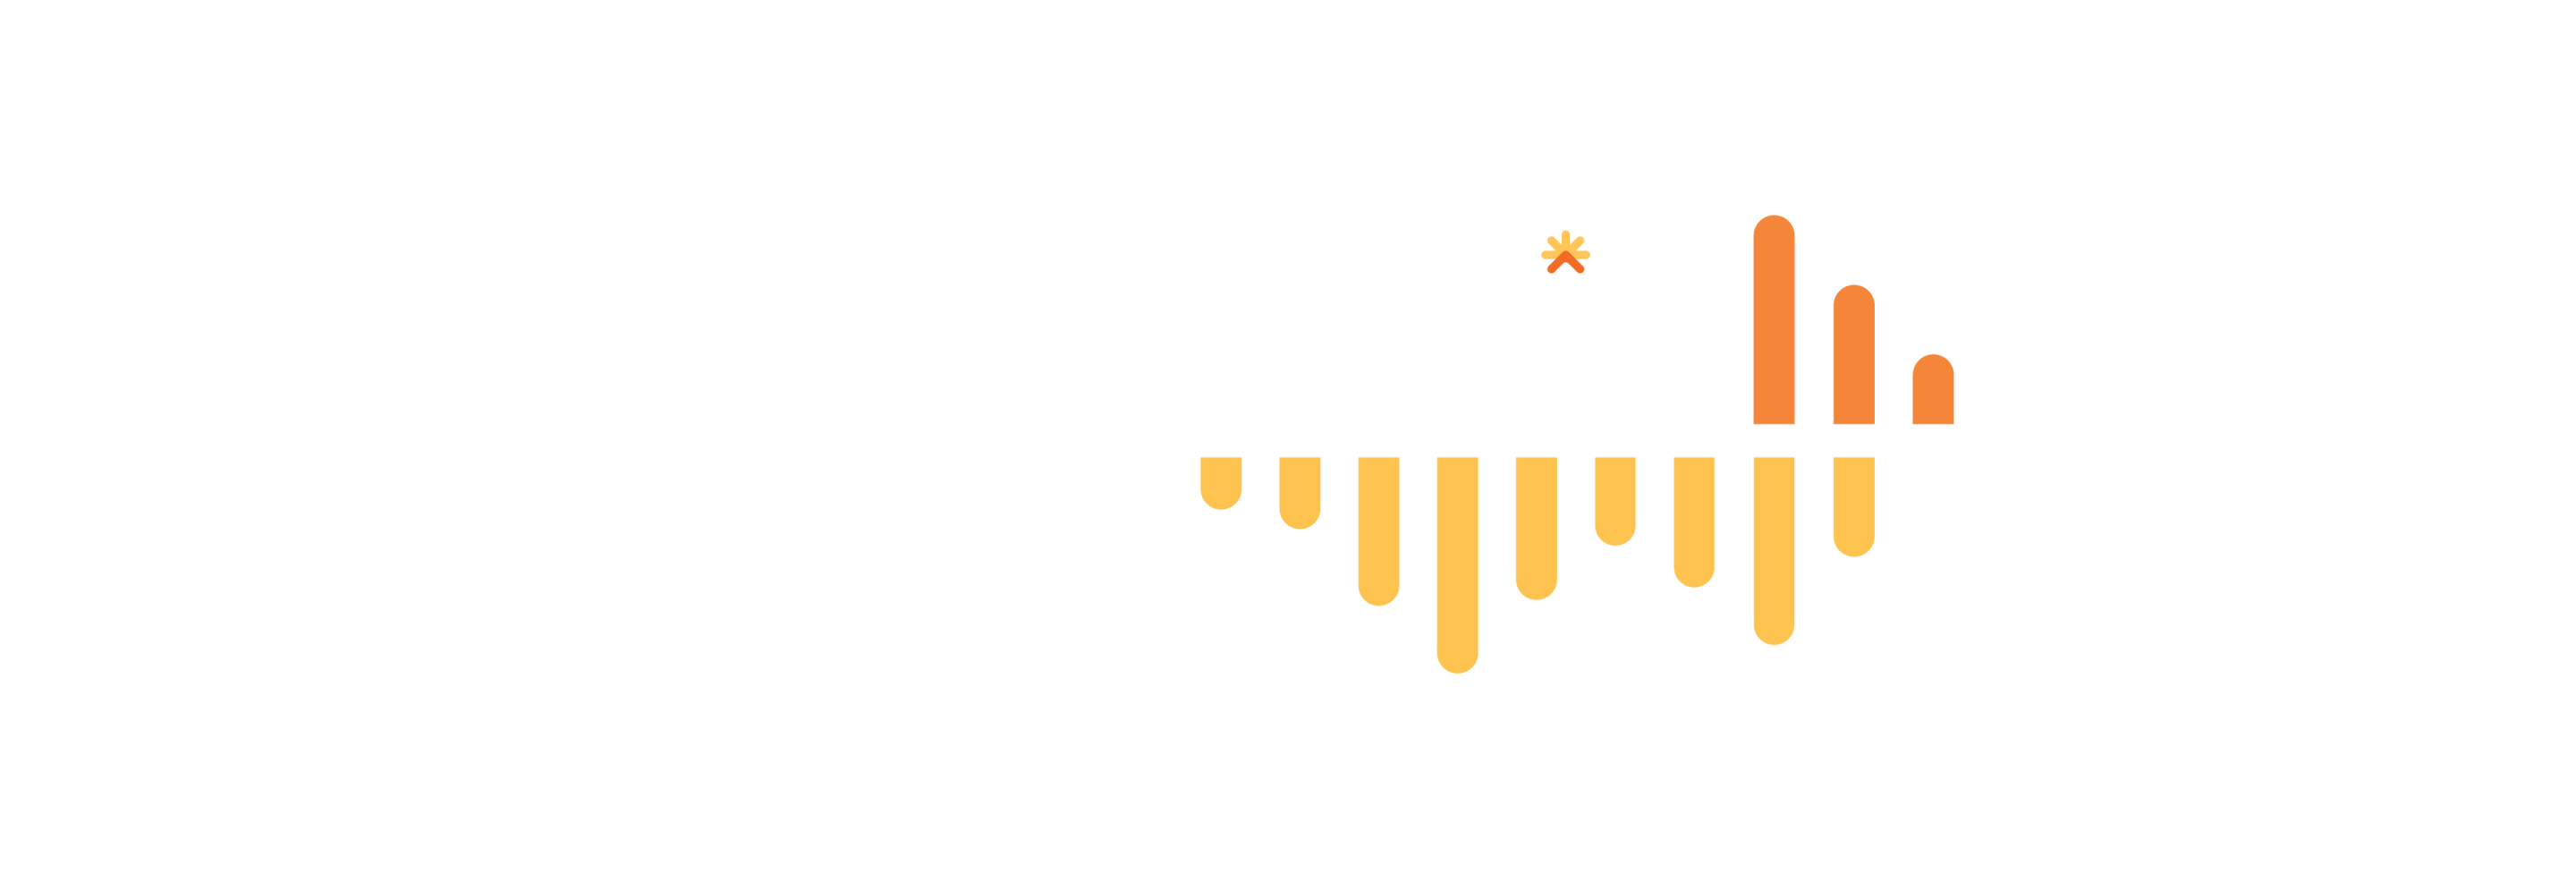 Digital Health On Air